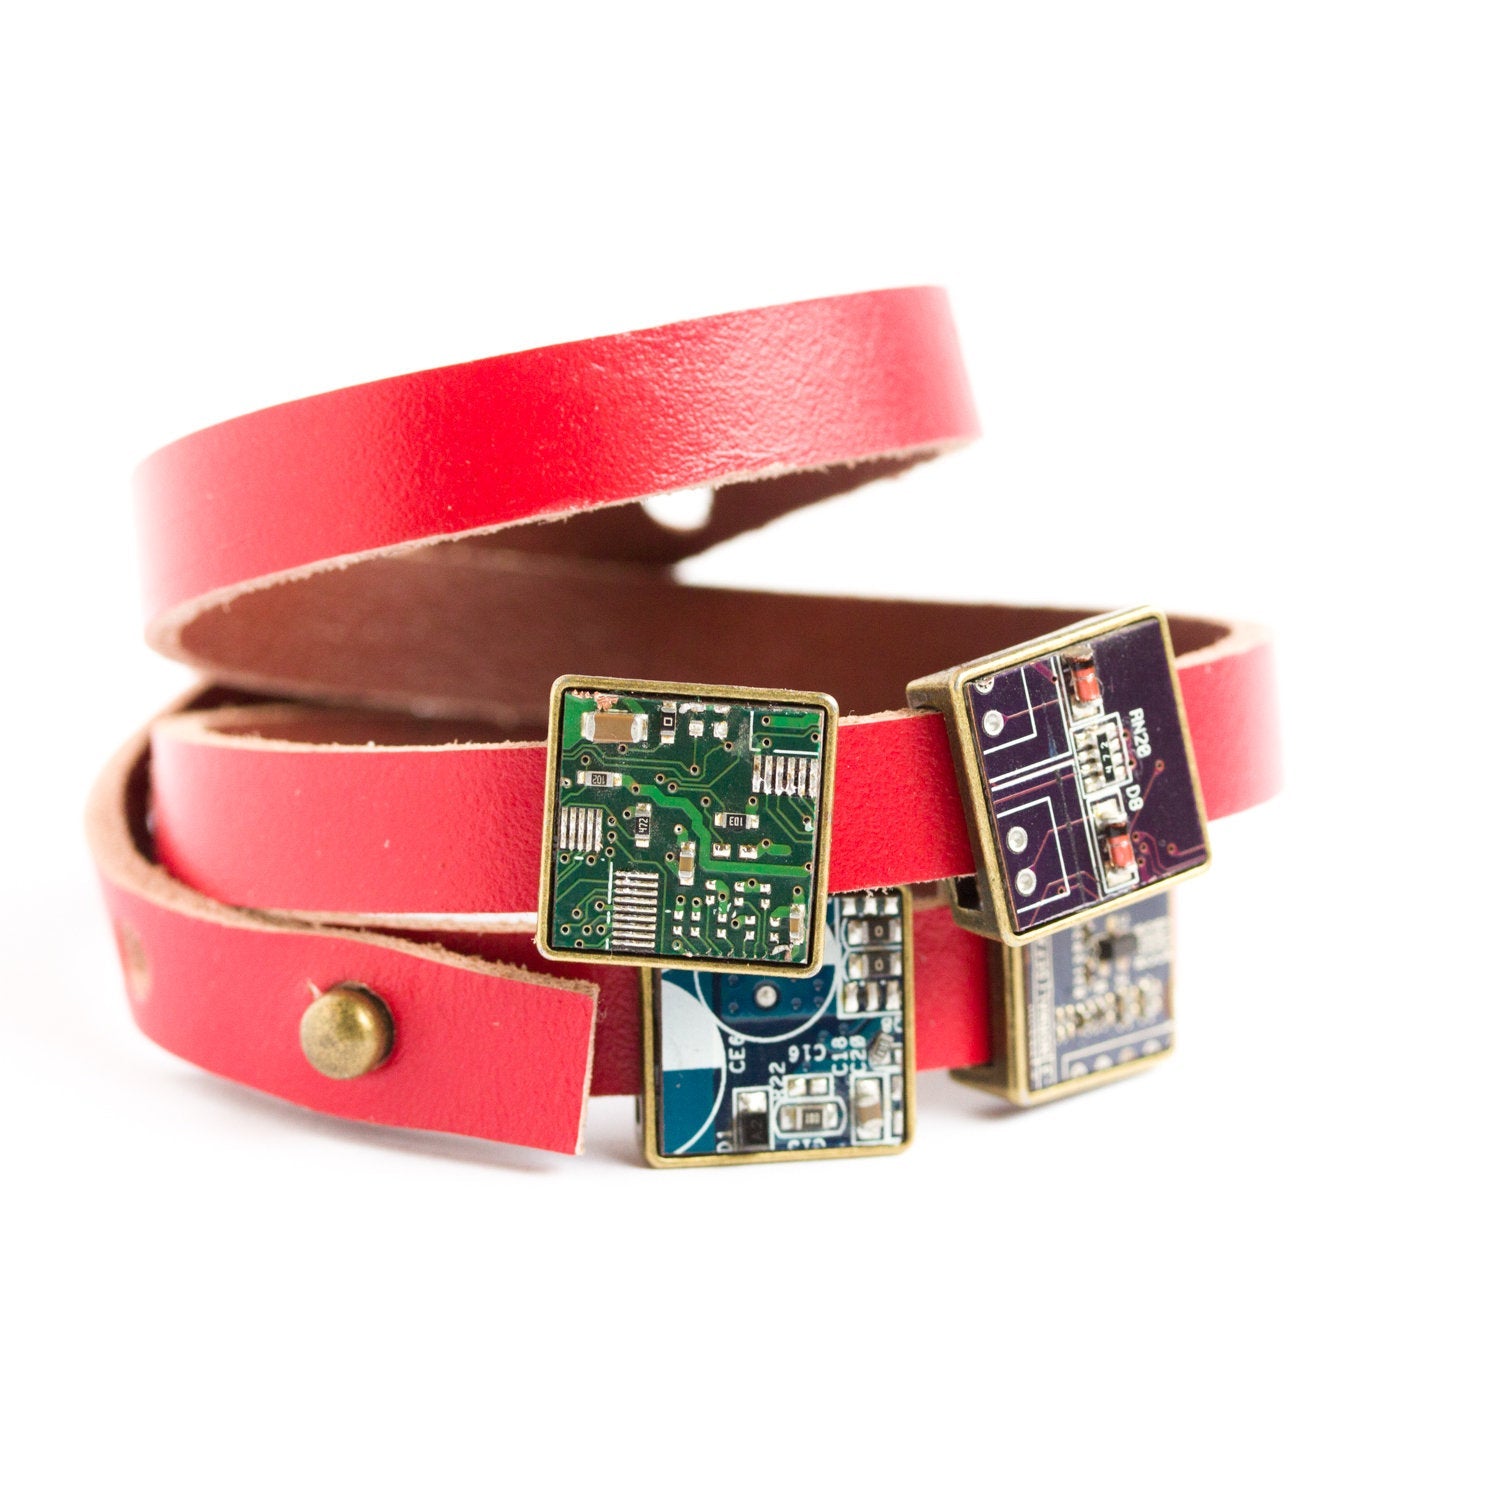 Wrap leather bracelet - customizable bracelet with circuit board beads